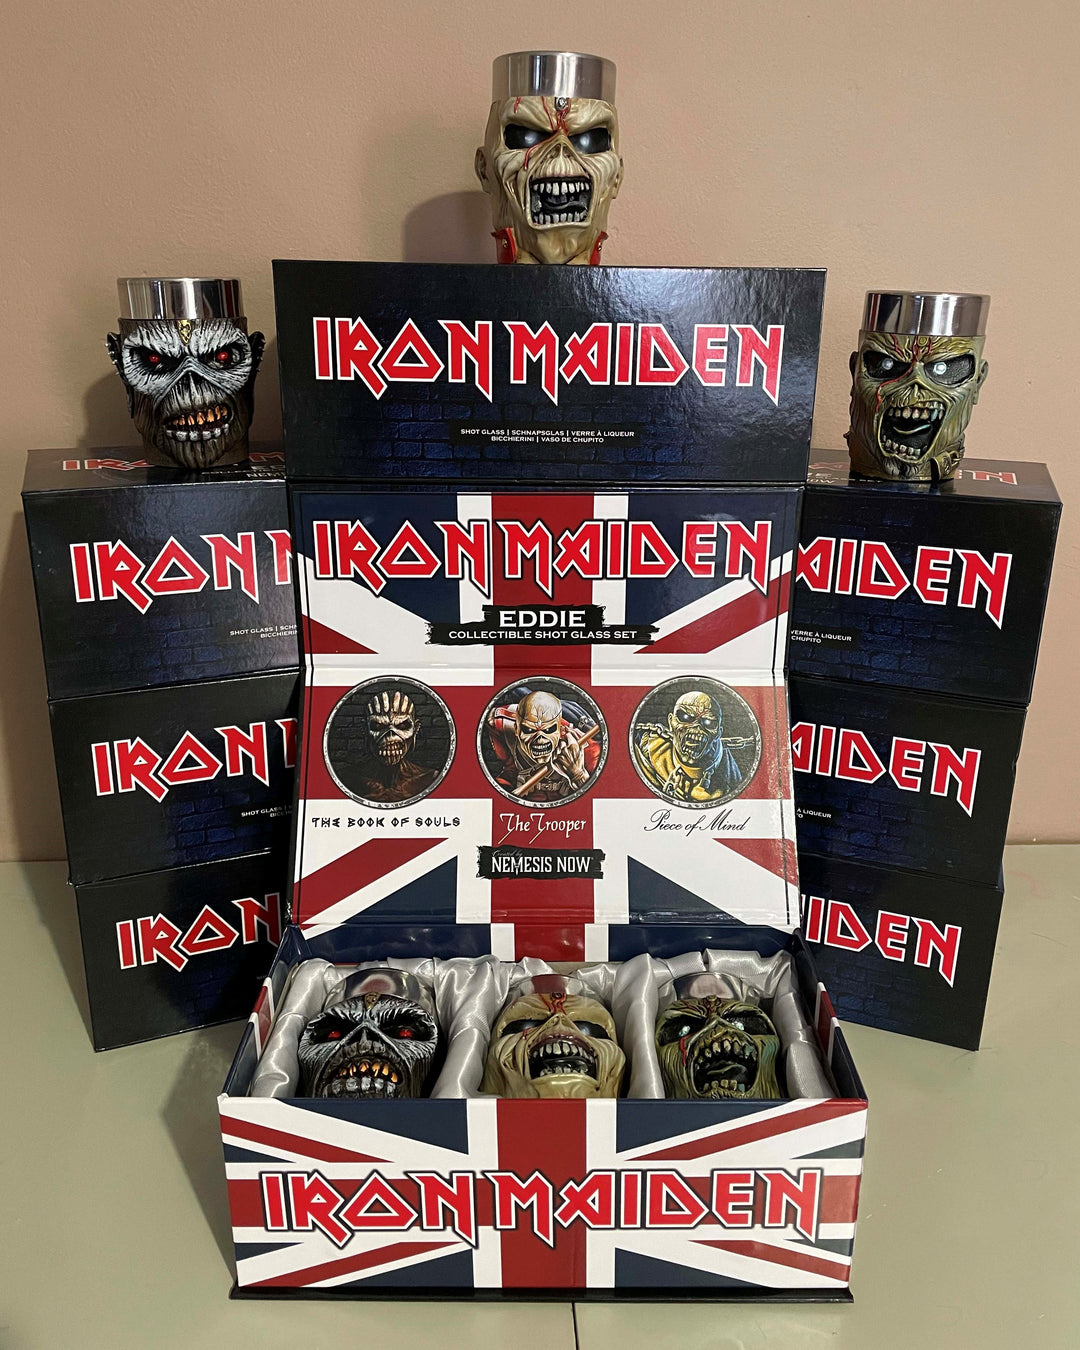 Discover Iron Maiden Merchandise at Planet Merch